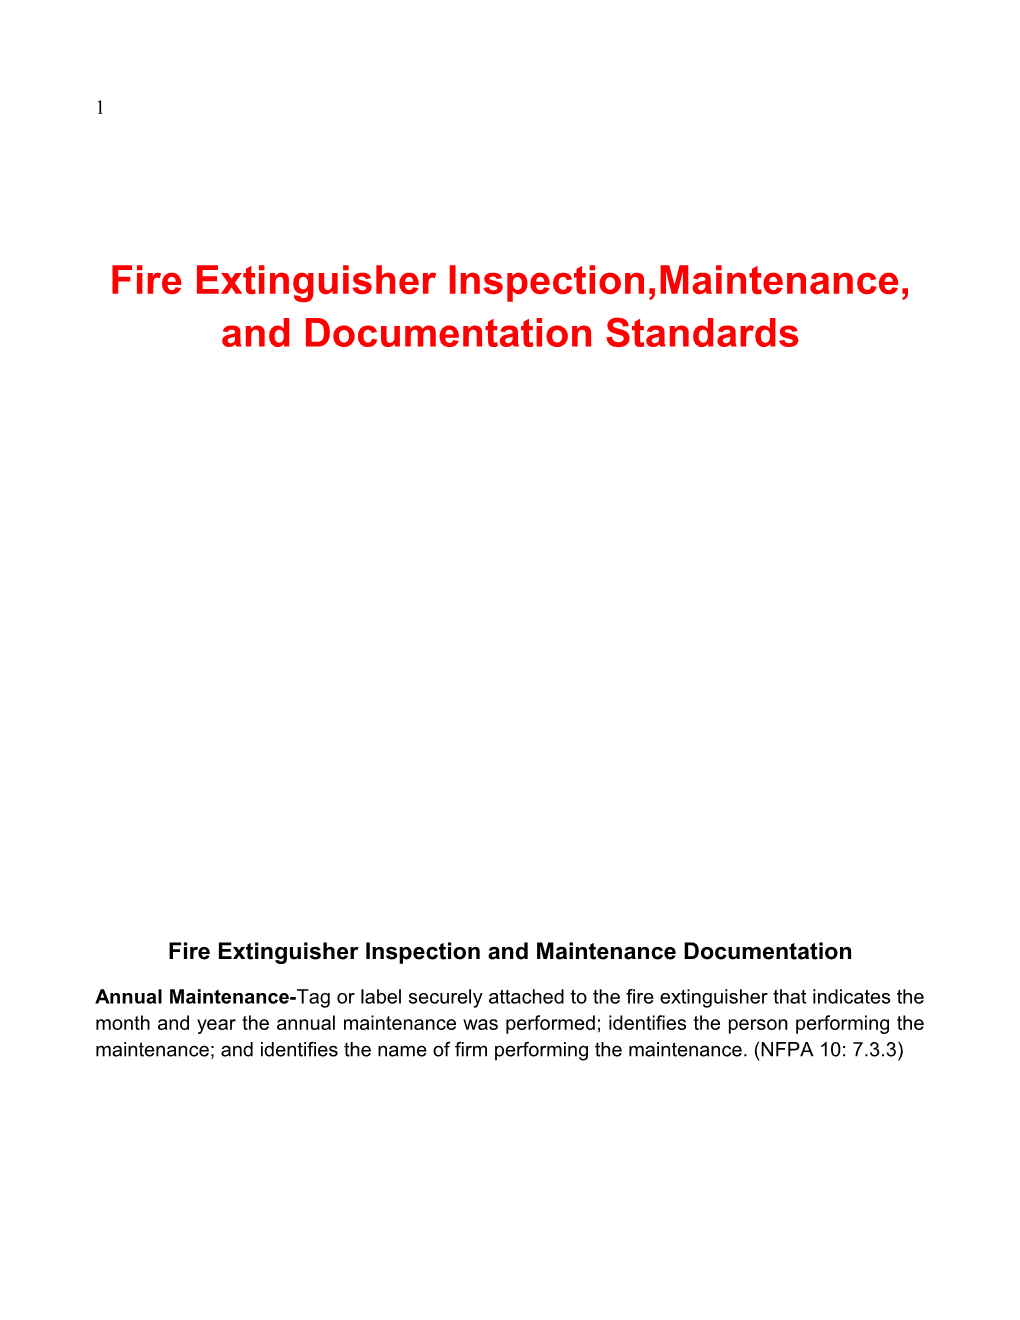 Fire Extinguisher Inspection Documentation